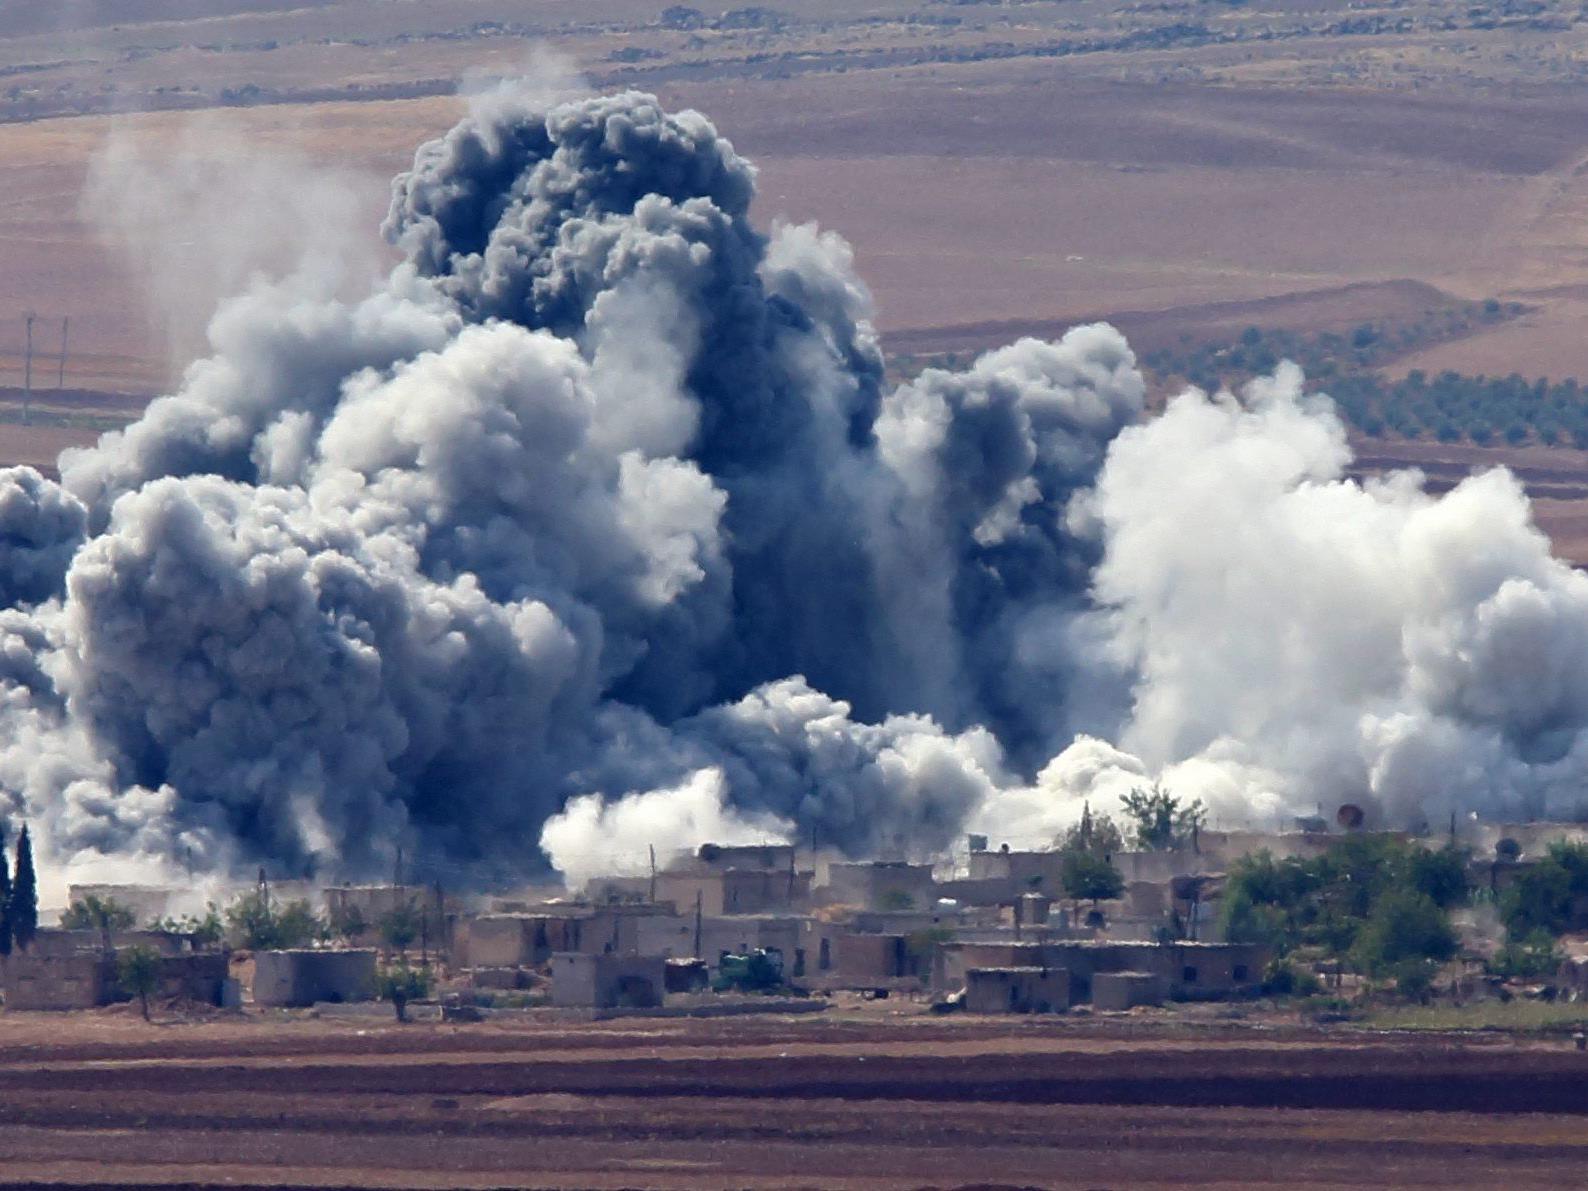 USA fliegen bislang stärkste Luftangriffe gegen IS